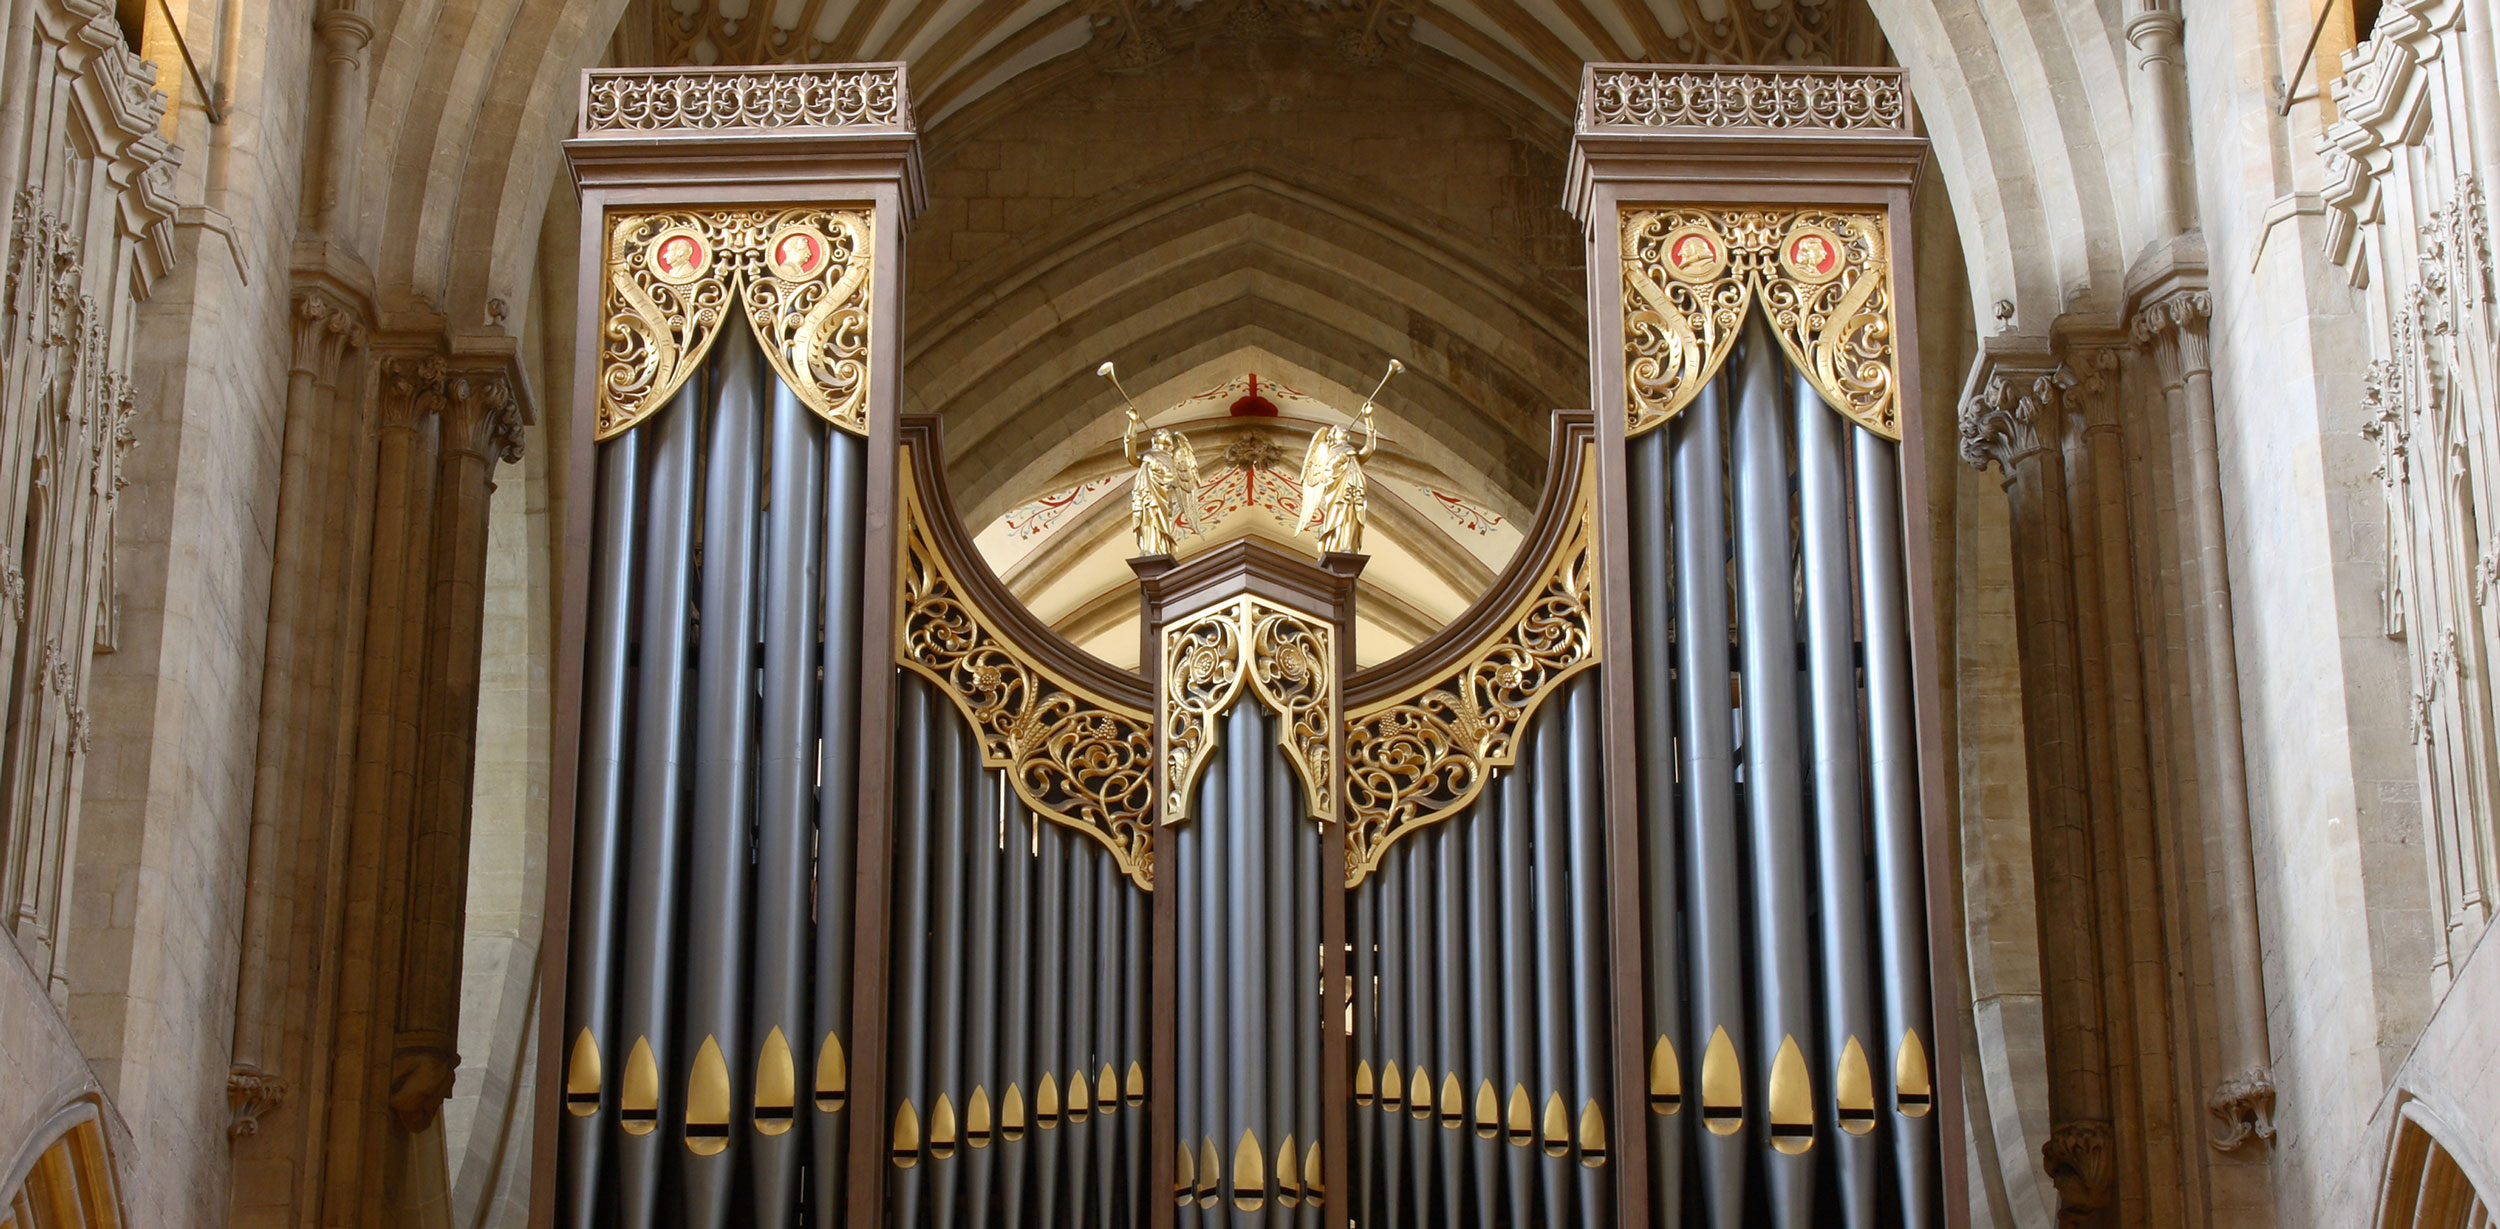 The organ at Wells Cathedral where Junior Organ Scholarship Recipients play